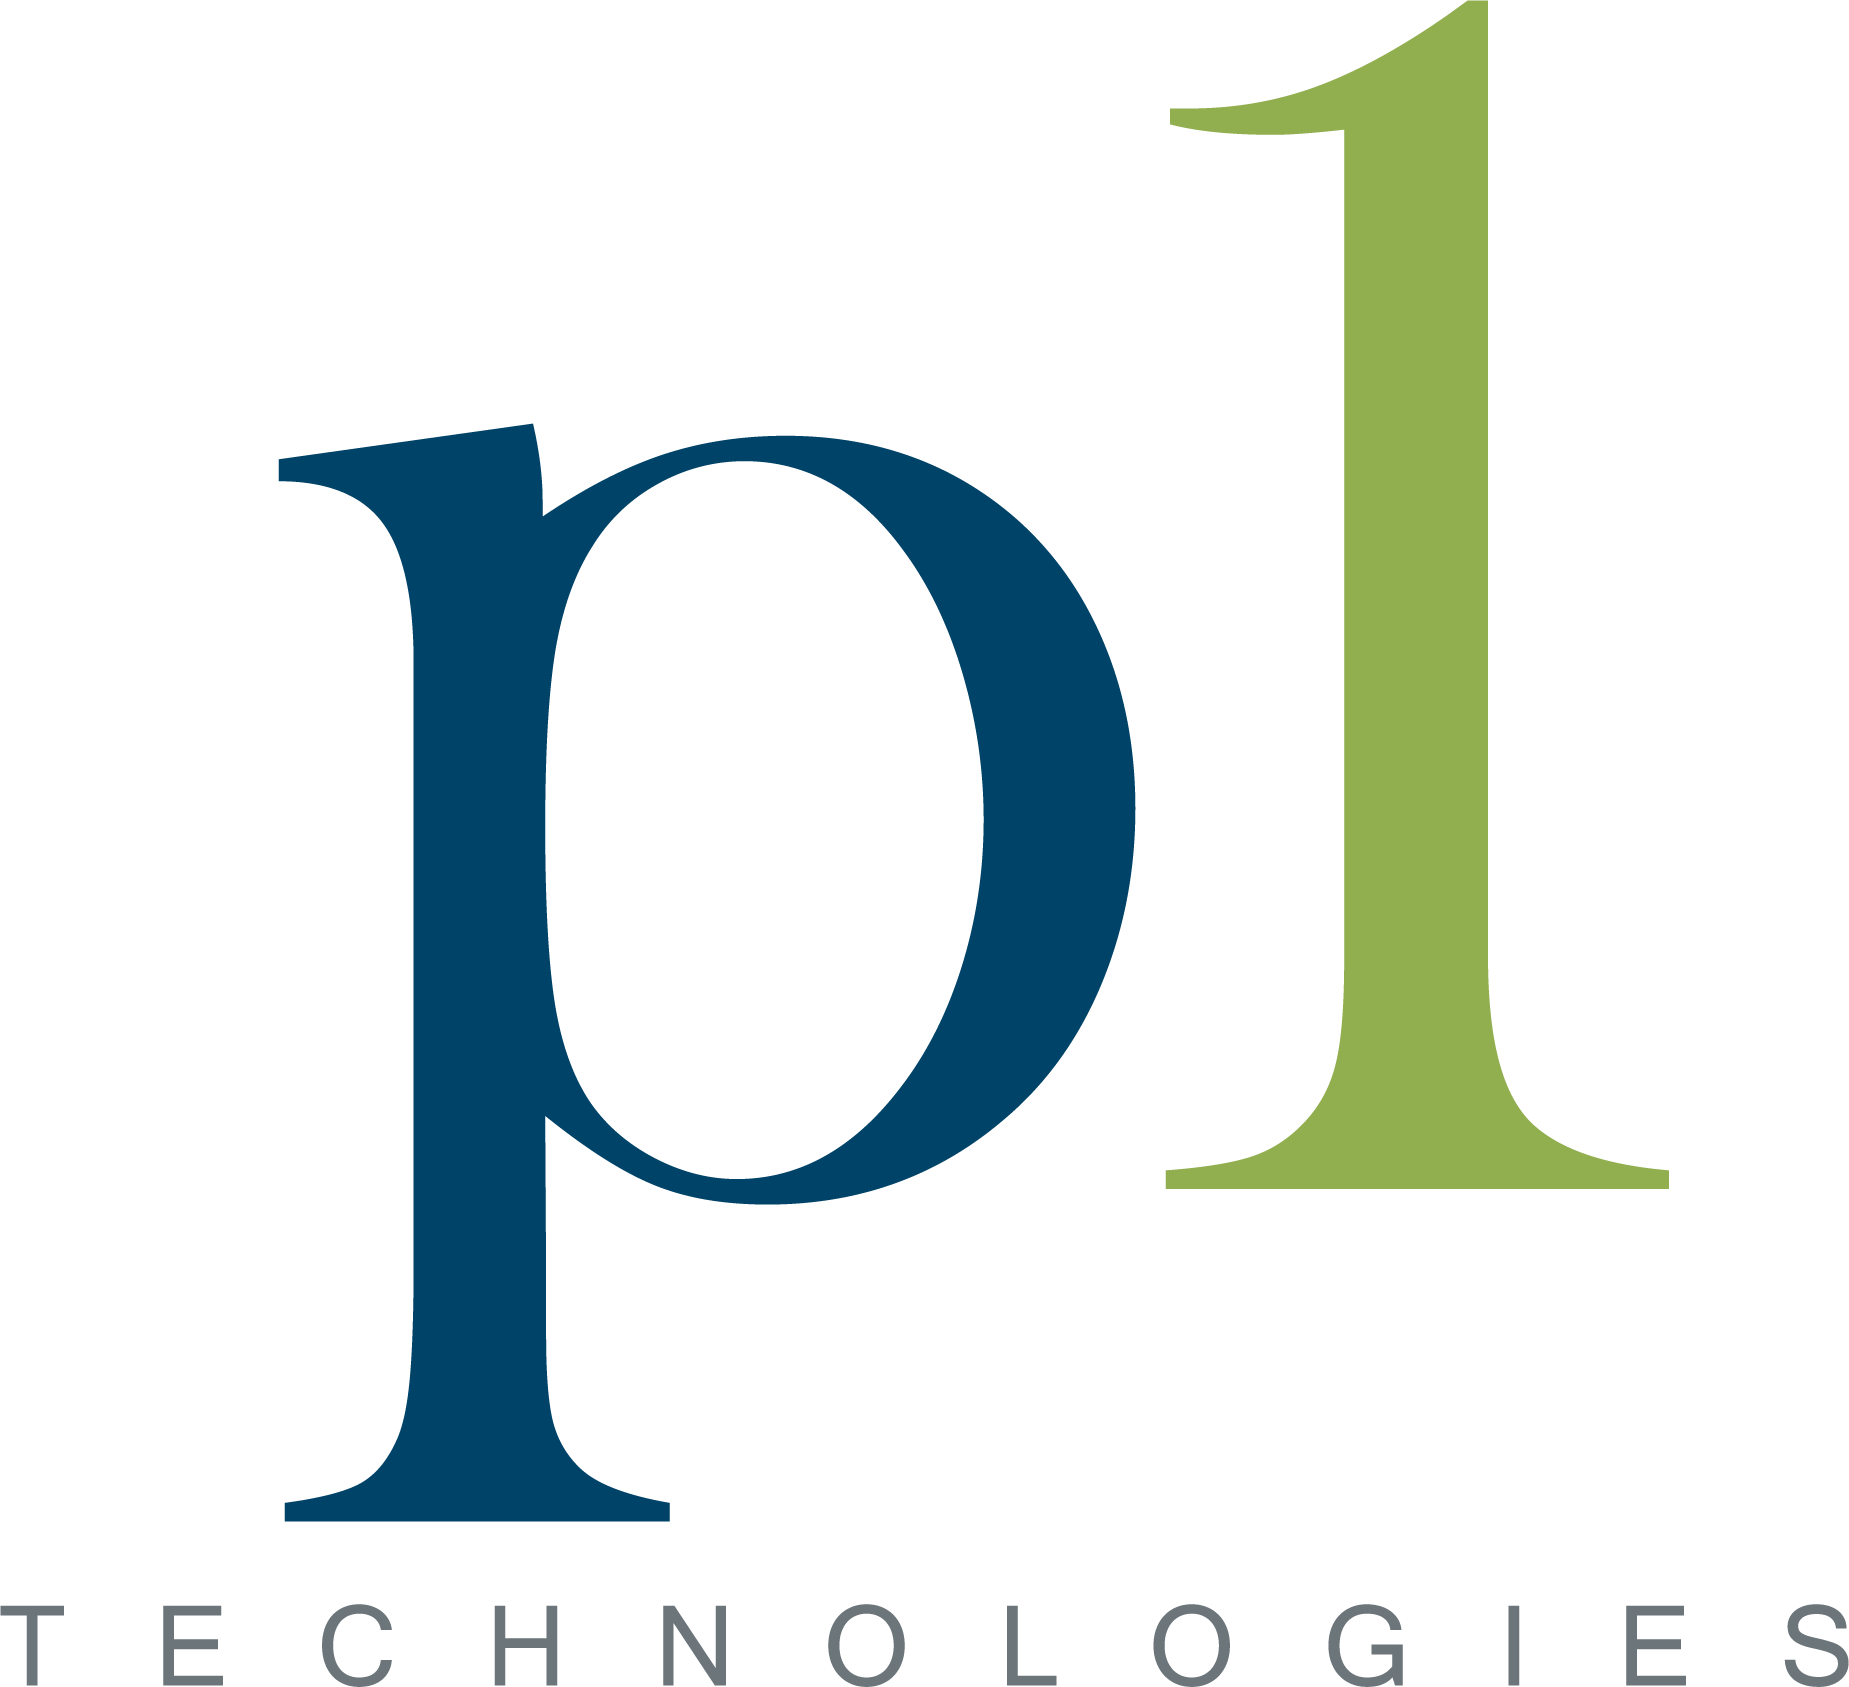 P1 revised logo color